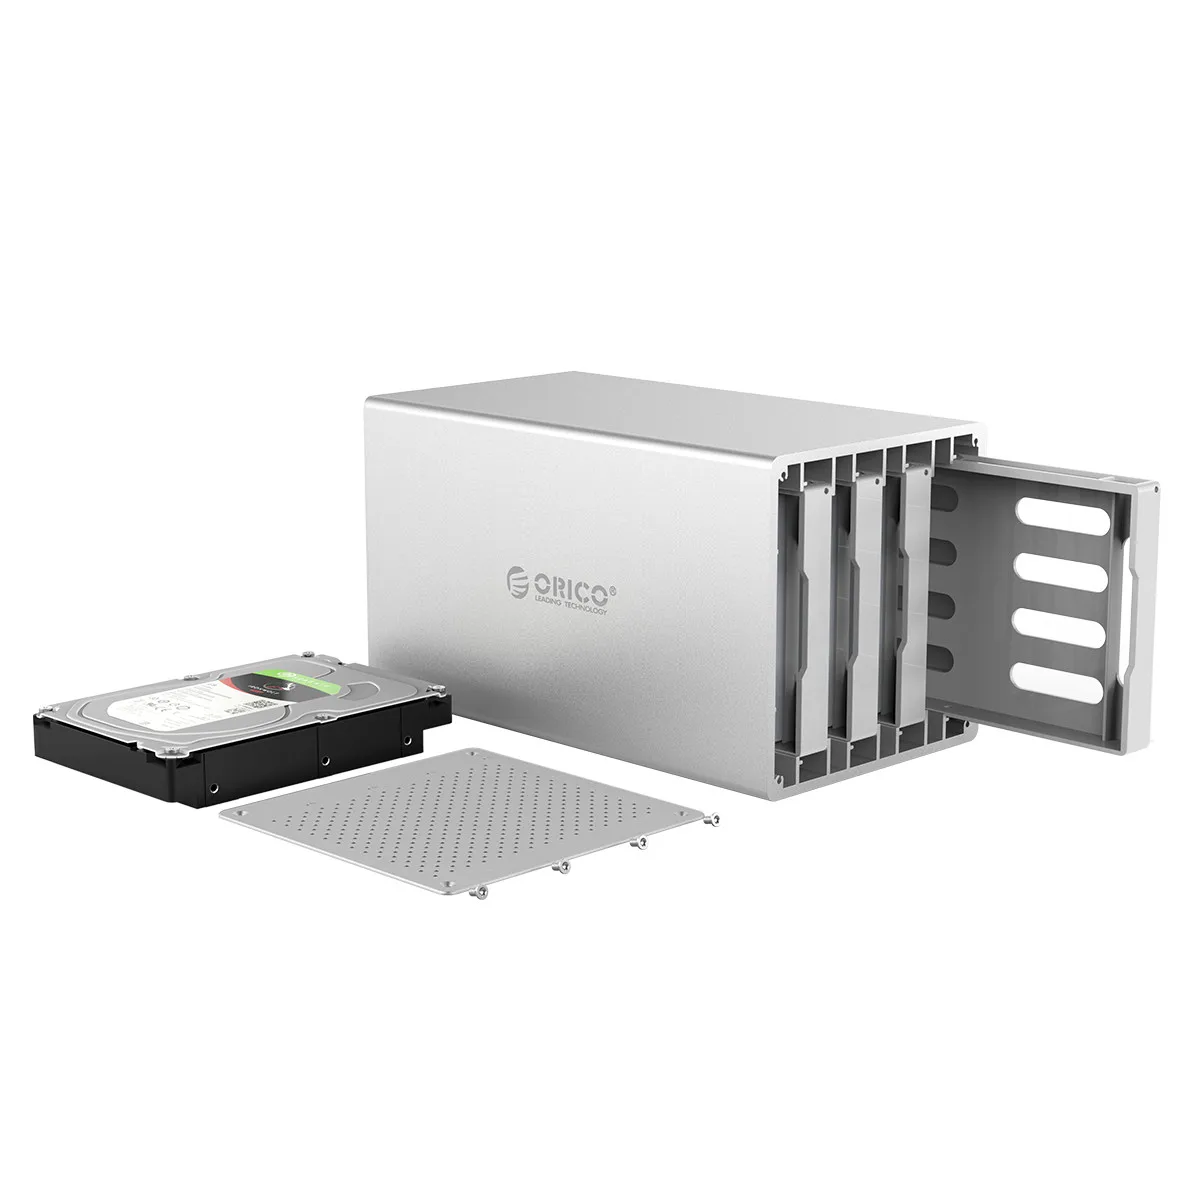 ORICO 5 Bay 3,5 дюймов HDD корпус SATA для USB3.1 type-c HDD чехол 5 Гбит/с Высокоскоростная передача данных для Mac/Win/Linux